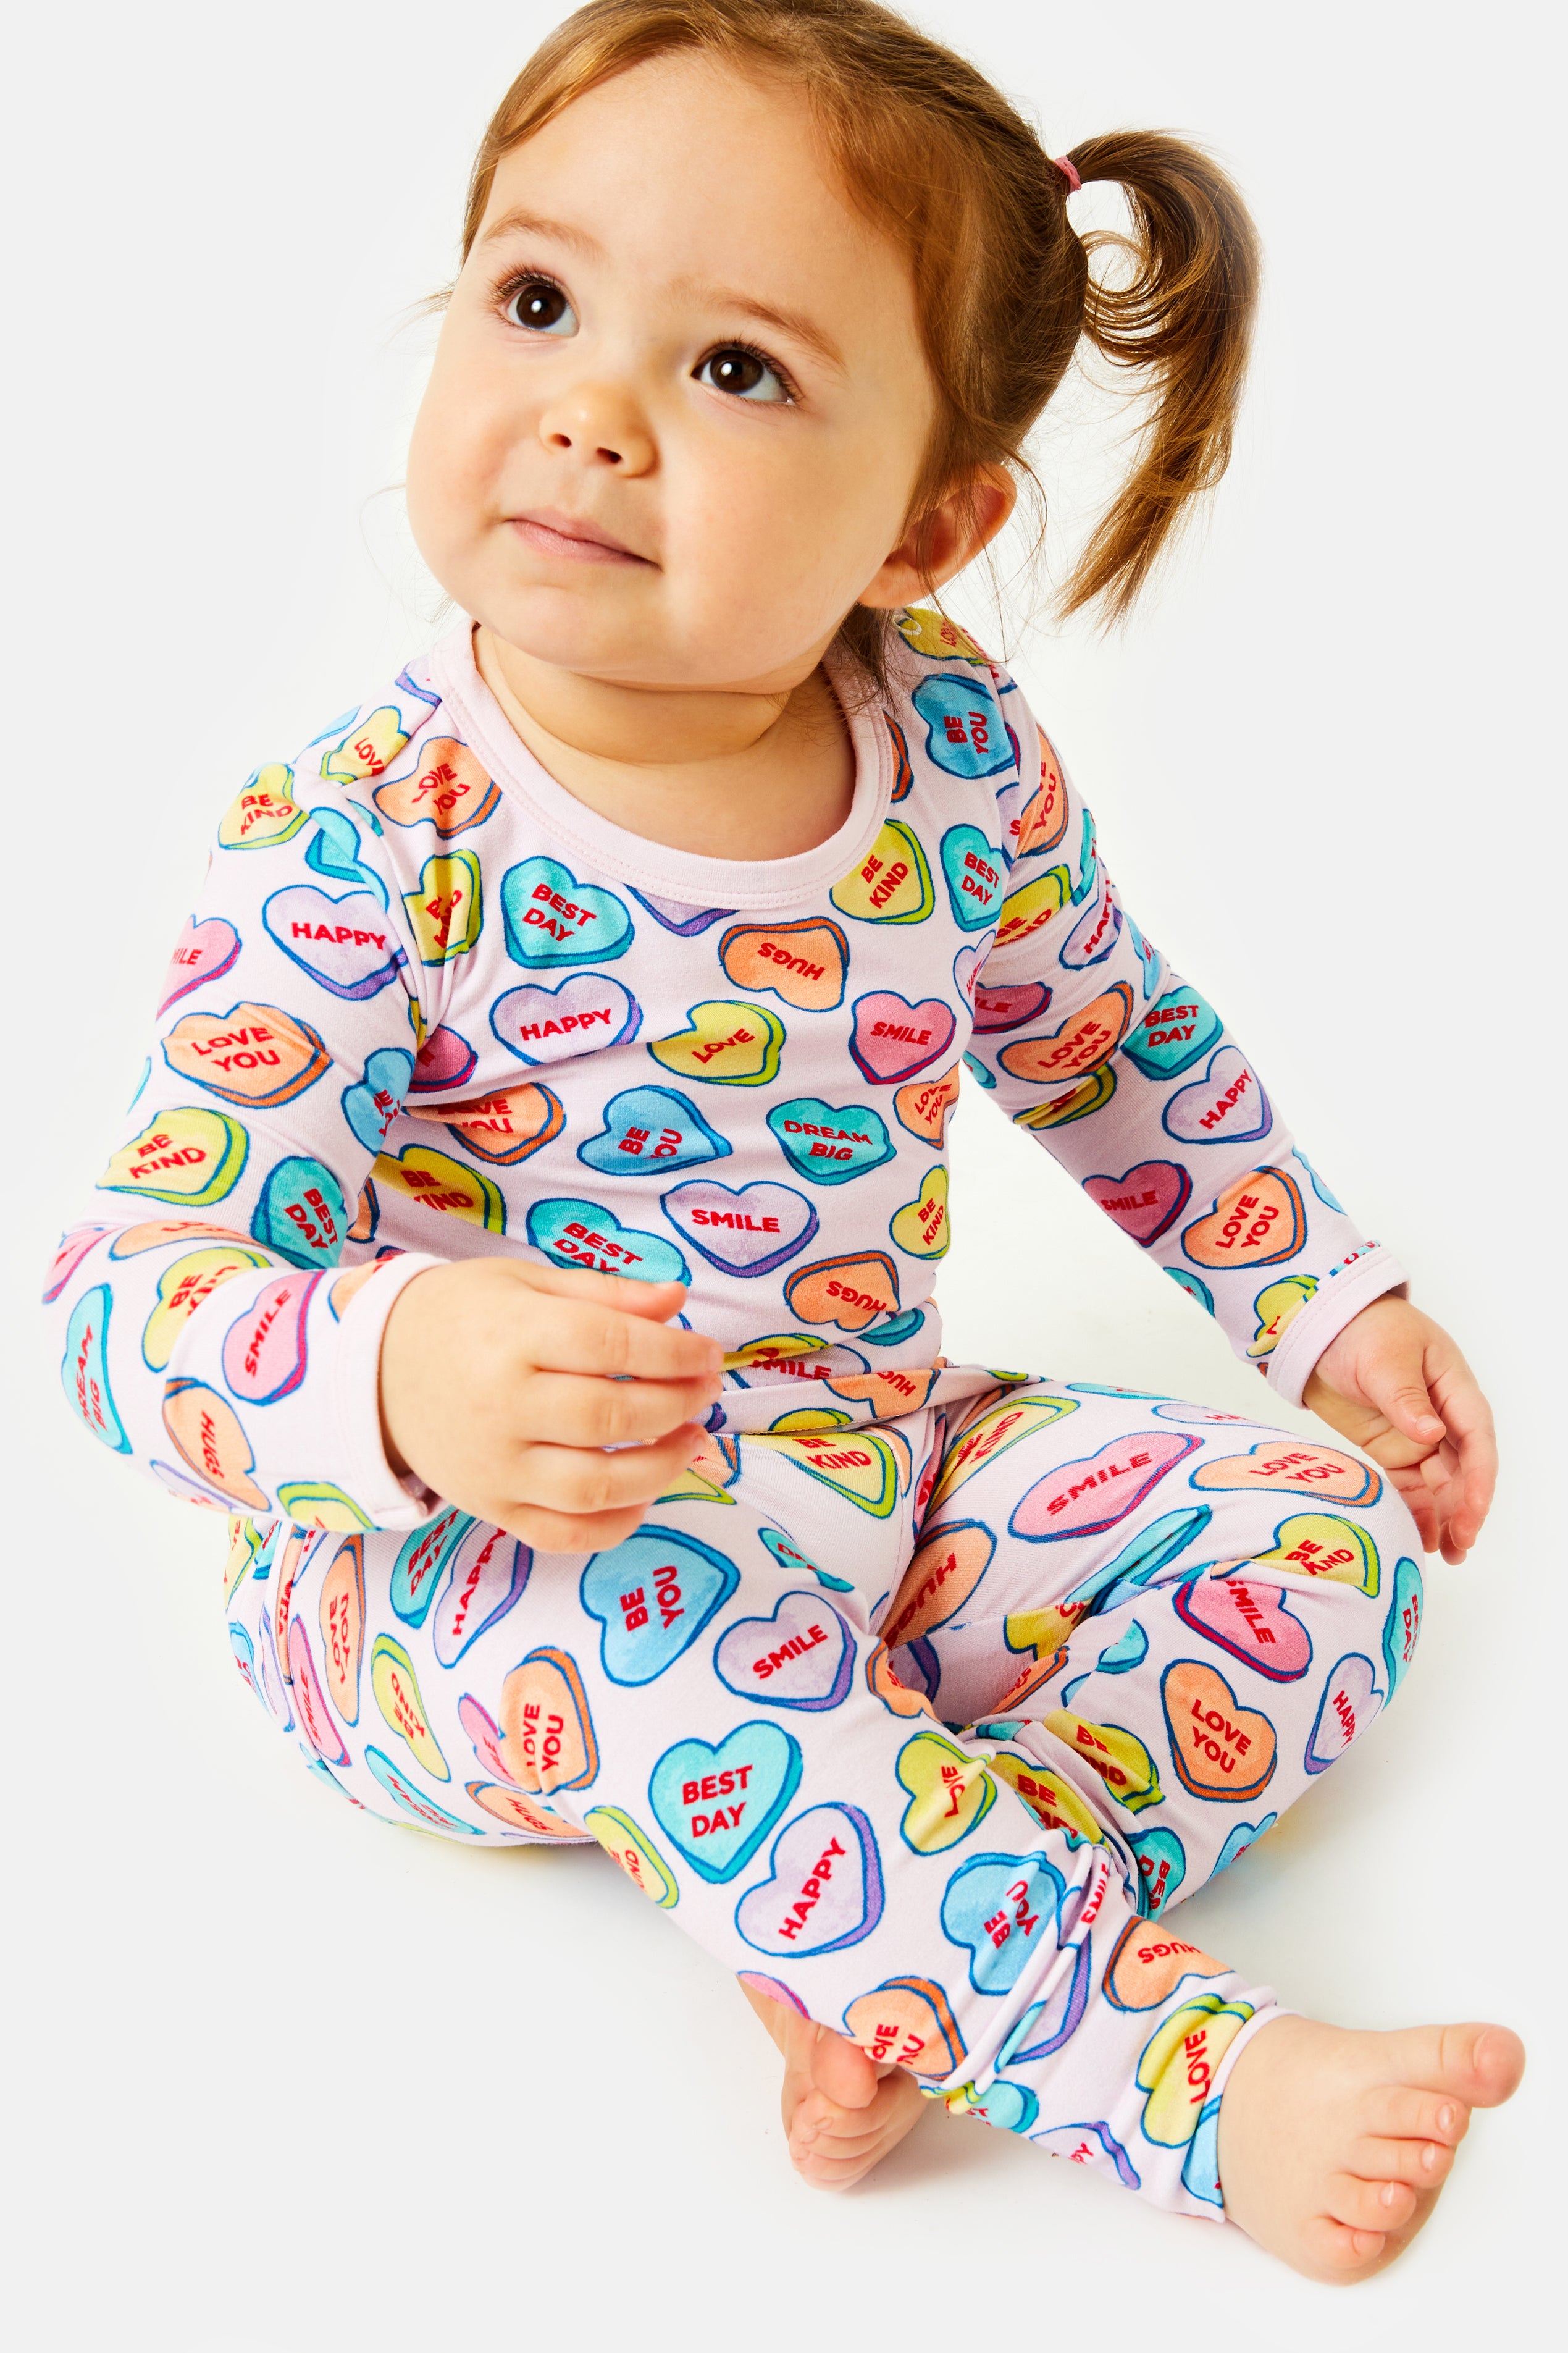 6-pc Satin Heart Print Pajama Set